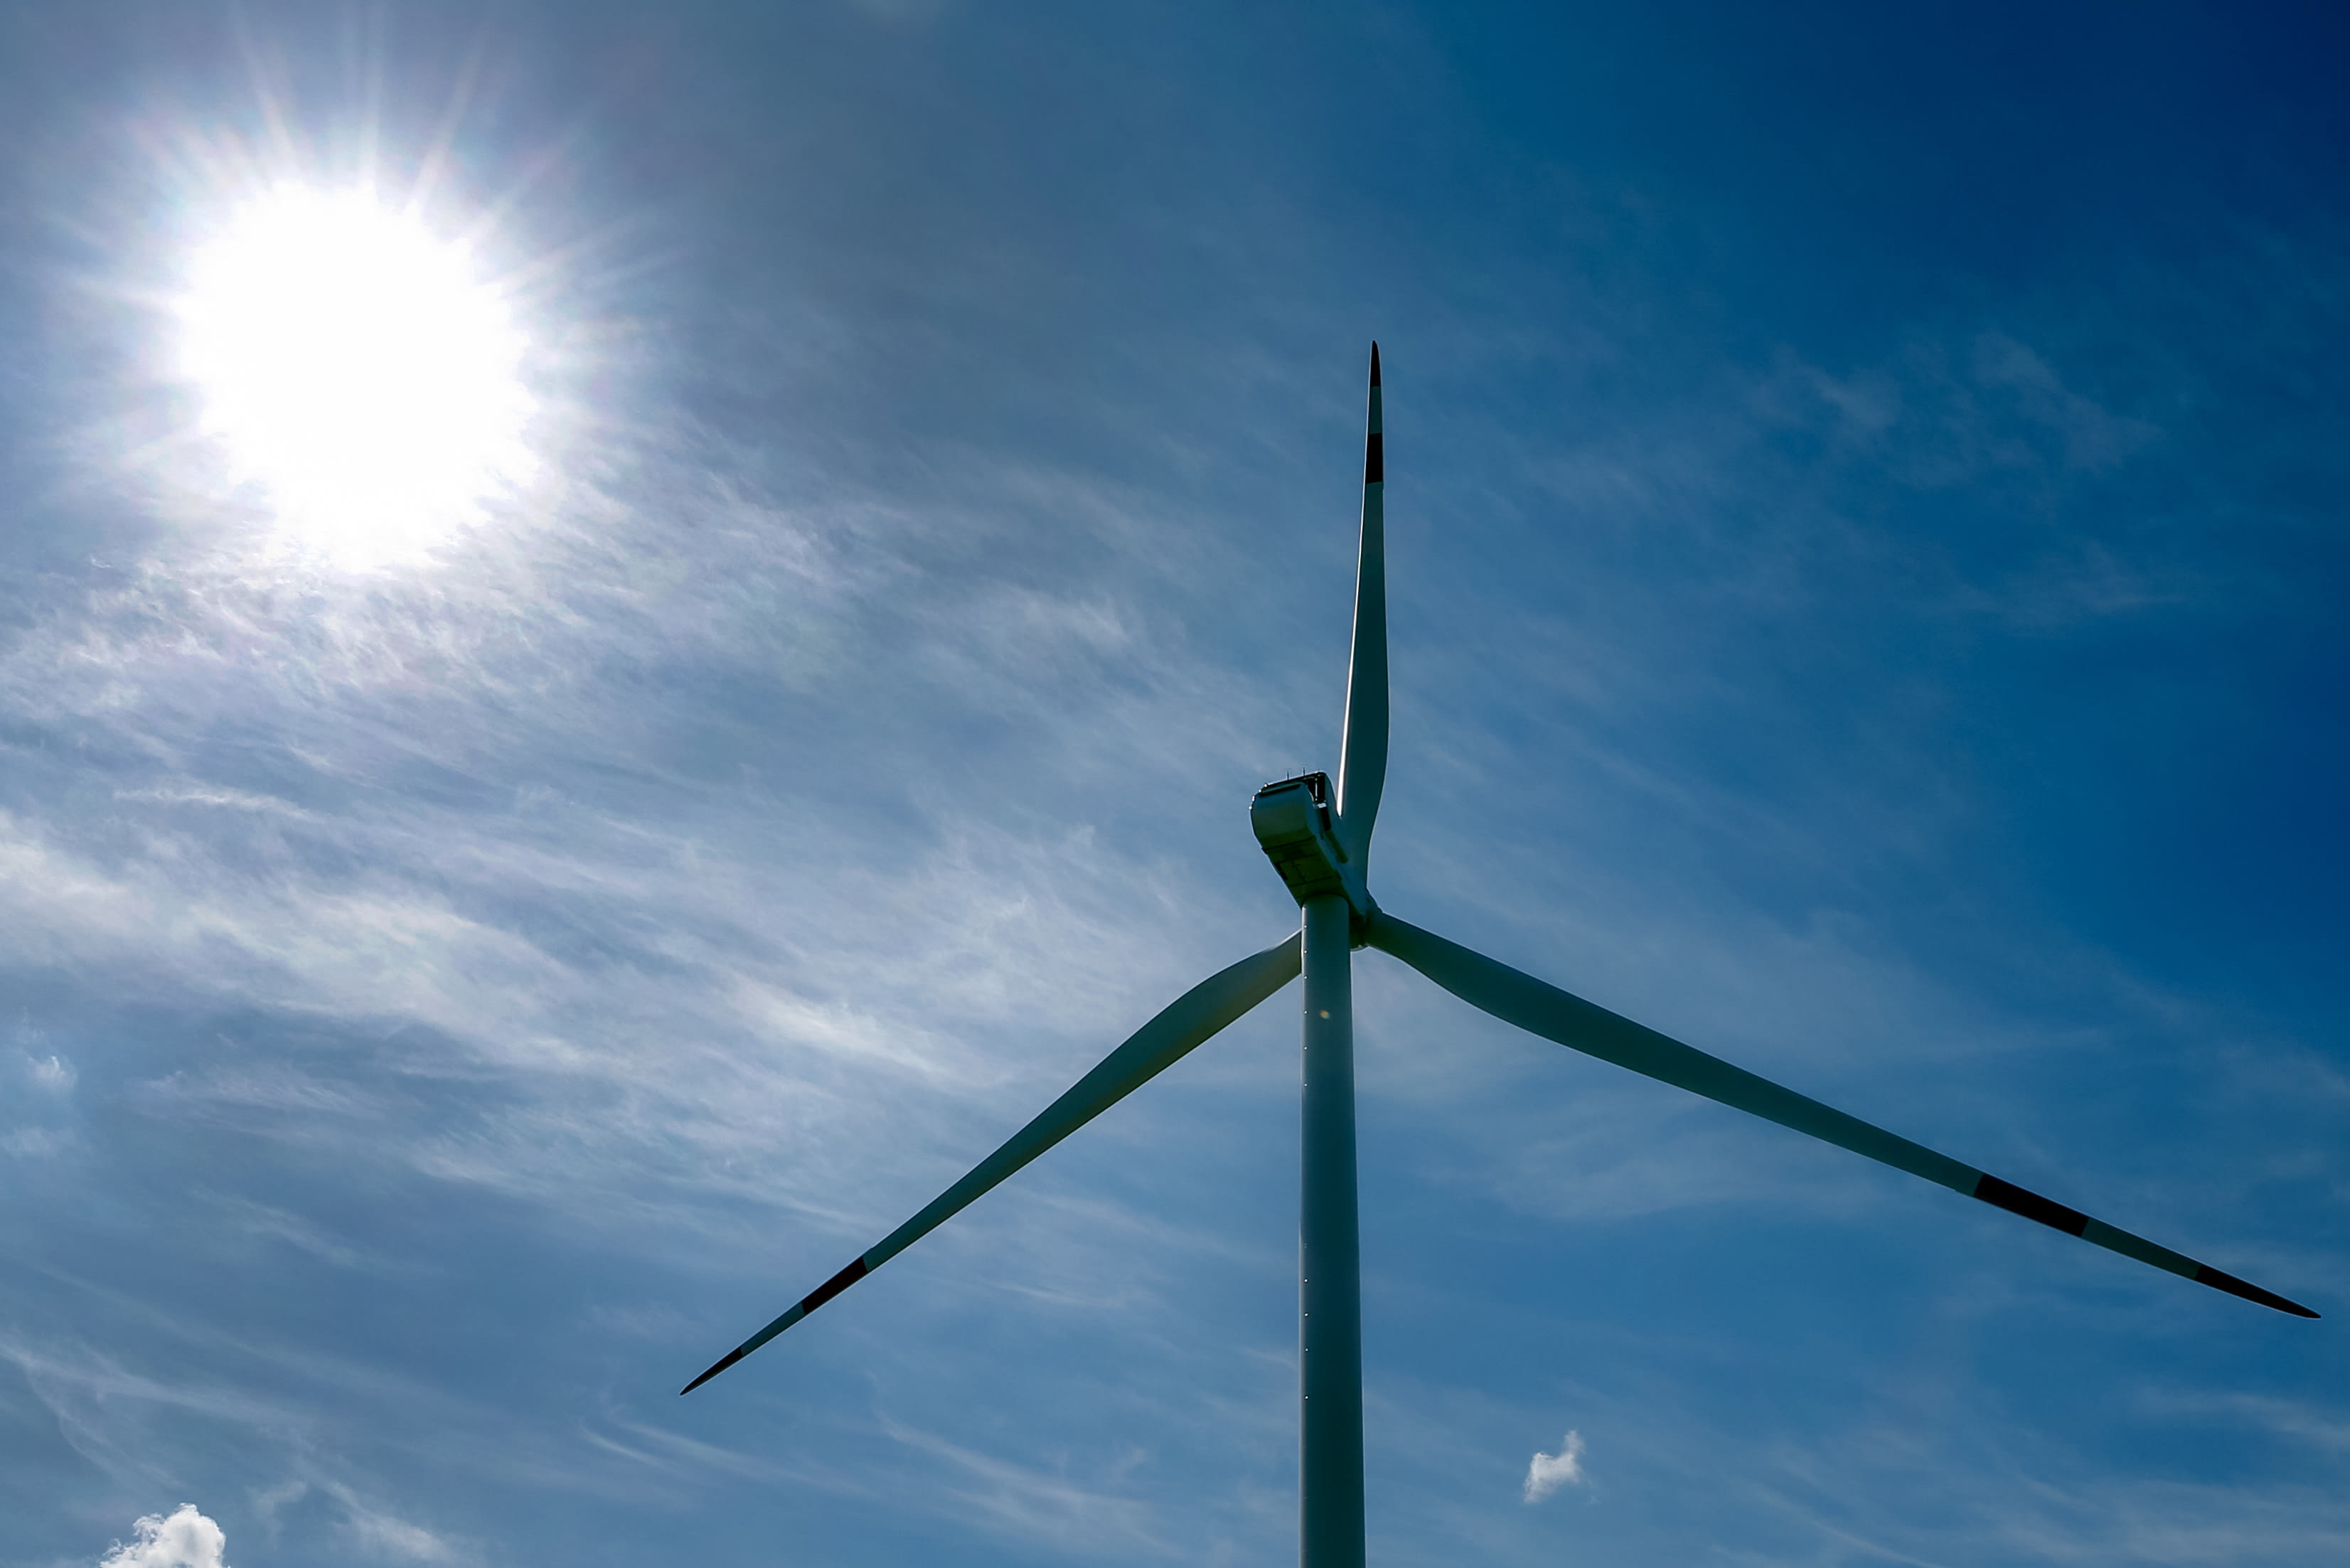 Vestas launches offshore jumbo wind turbine to match rivals